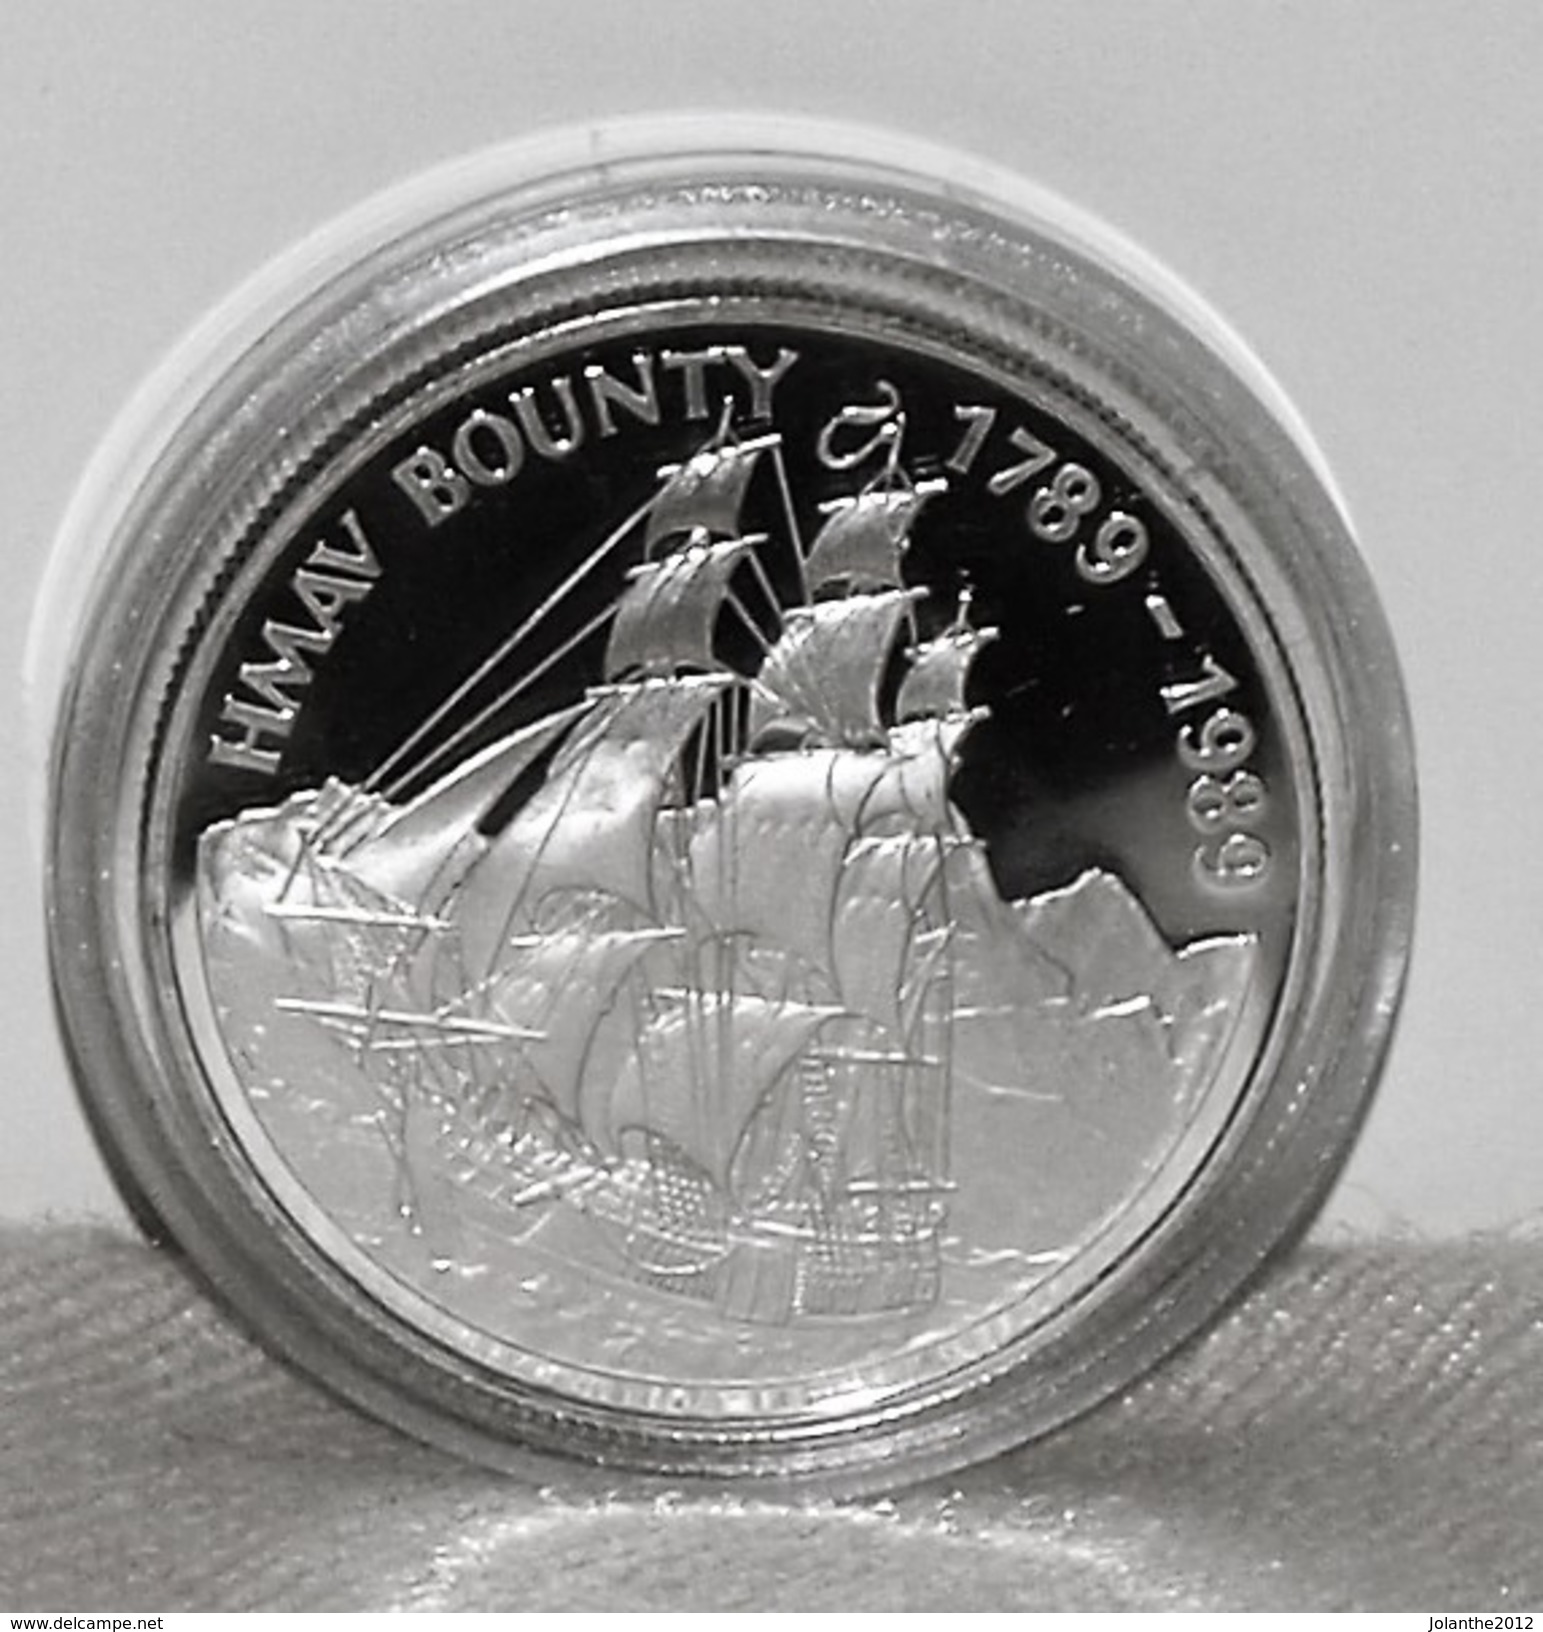 Münze/Coin Silber/Ag 925 Pitcairn Islands, Meuterei Auf Der Bounty/Mutiny On Ship Bounty 1789-1989, 1 Dollar - Pitcairneilanden